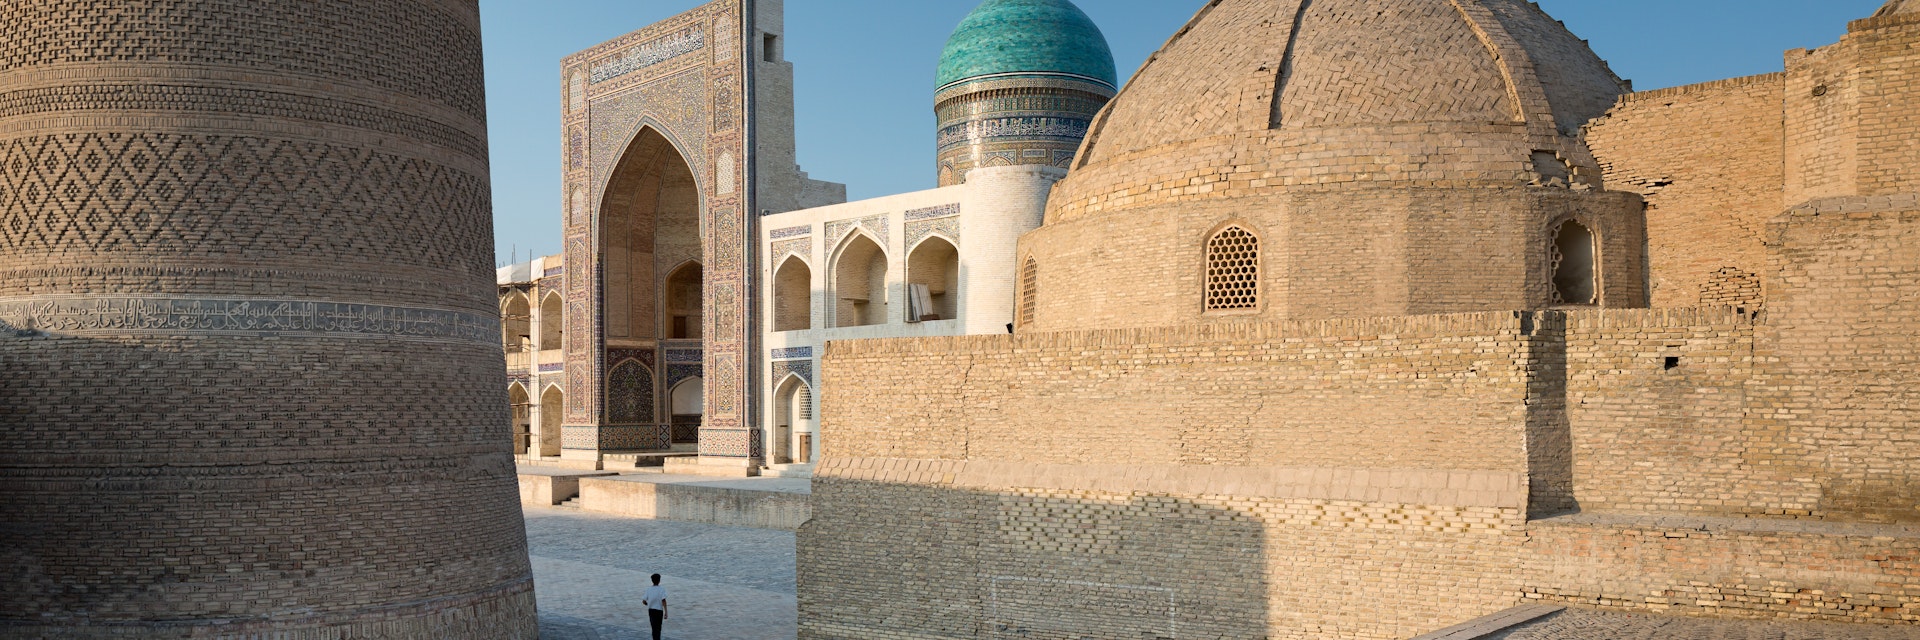 Kalon Minaret leading to the Mir-i-Arab Medressa in Bukhara, Uzbekistan.
